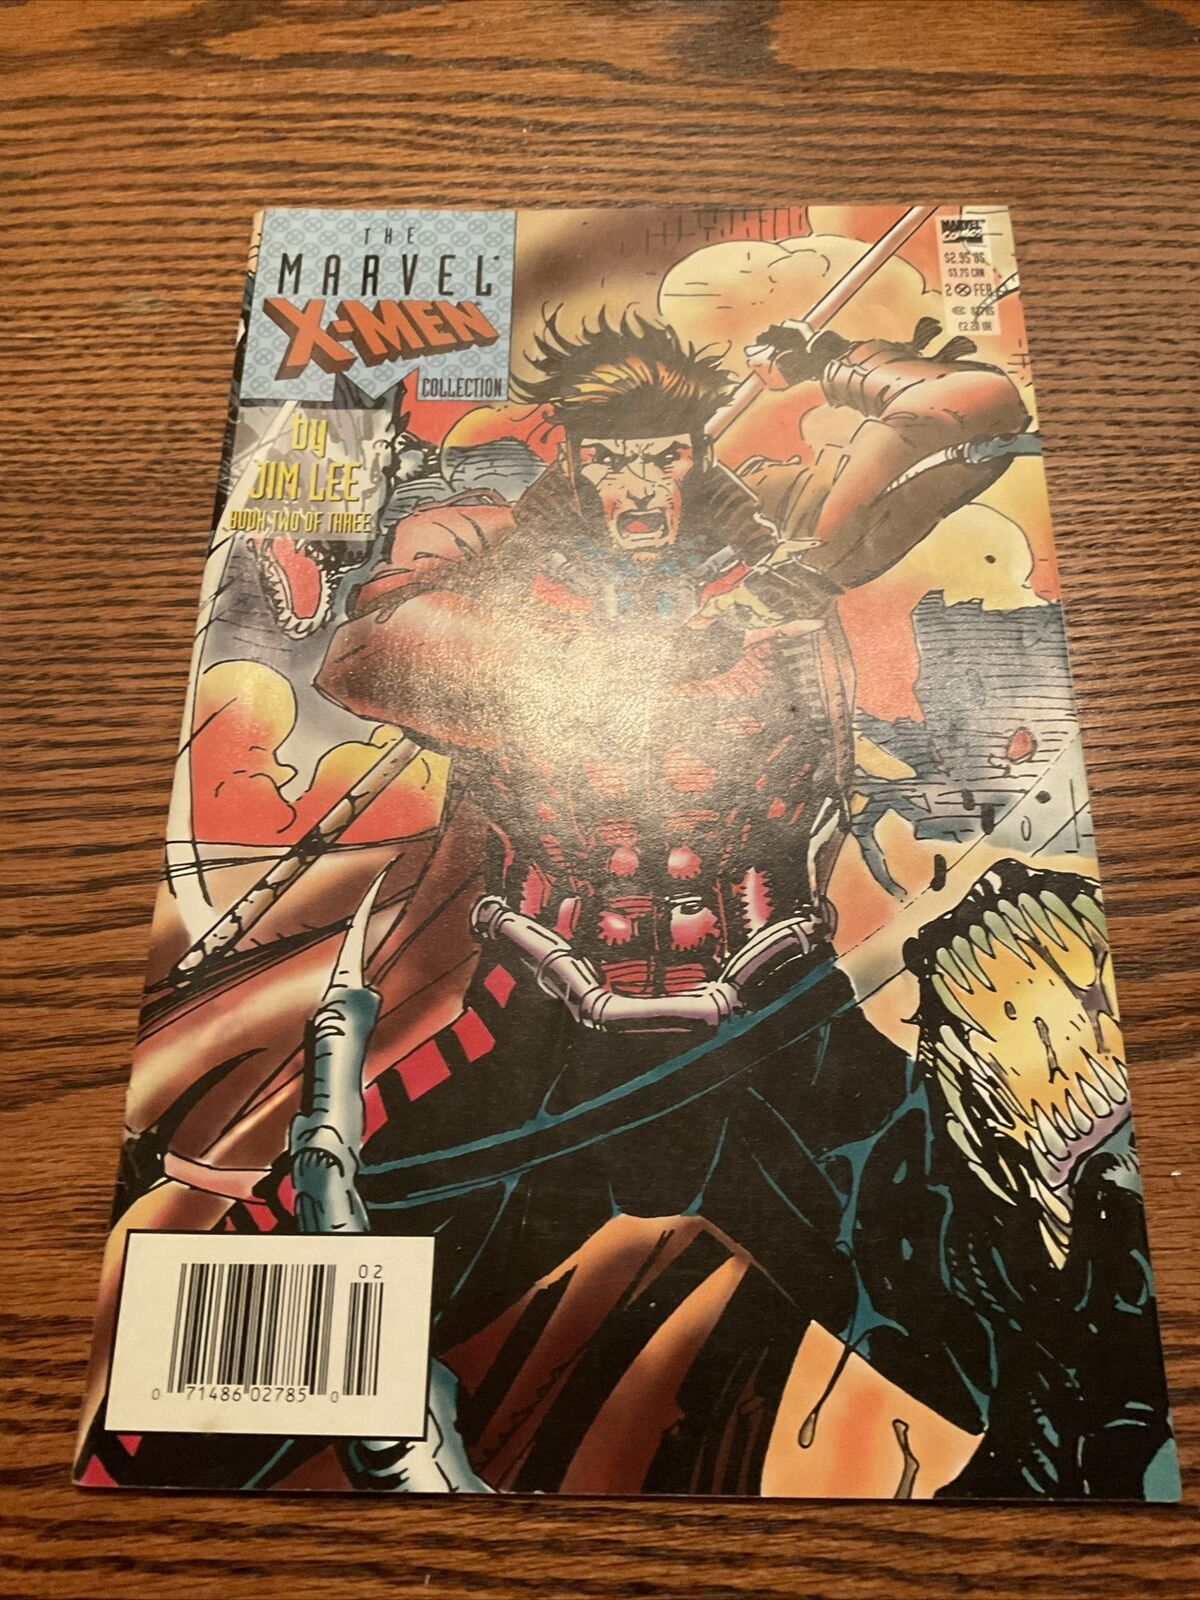 The marvel X-Men collection #2 1993 Jim Lee